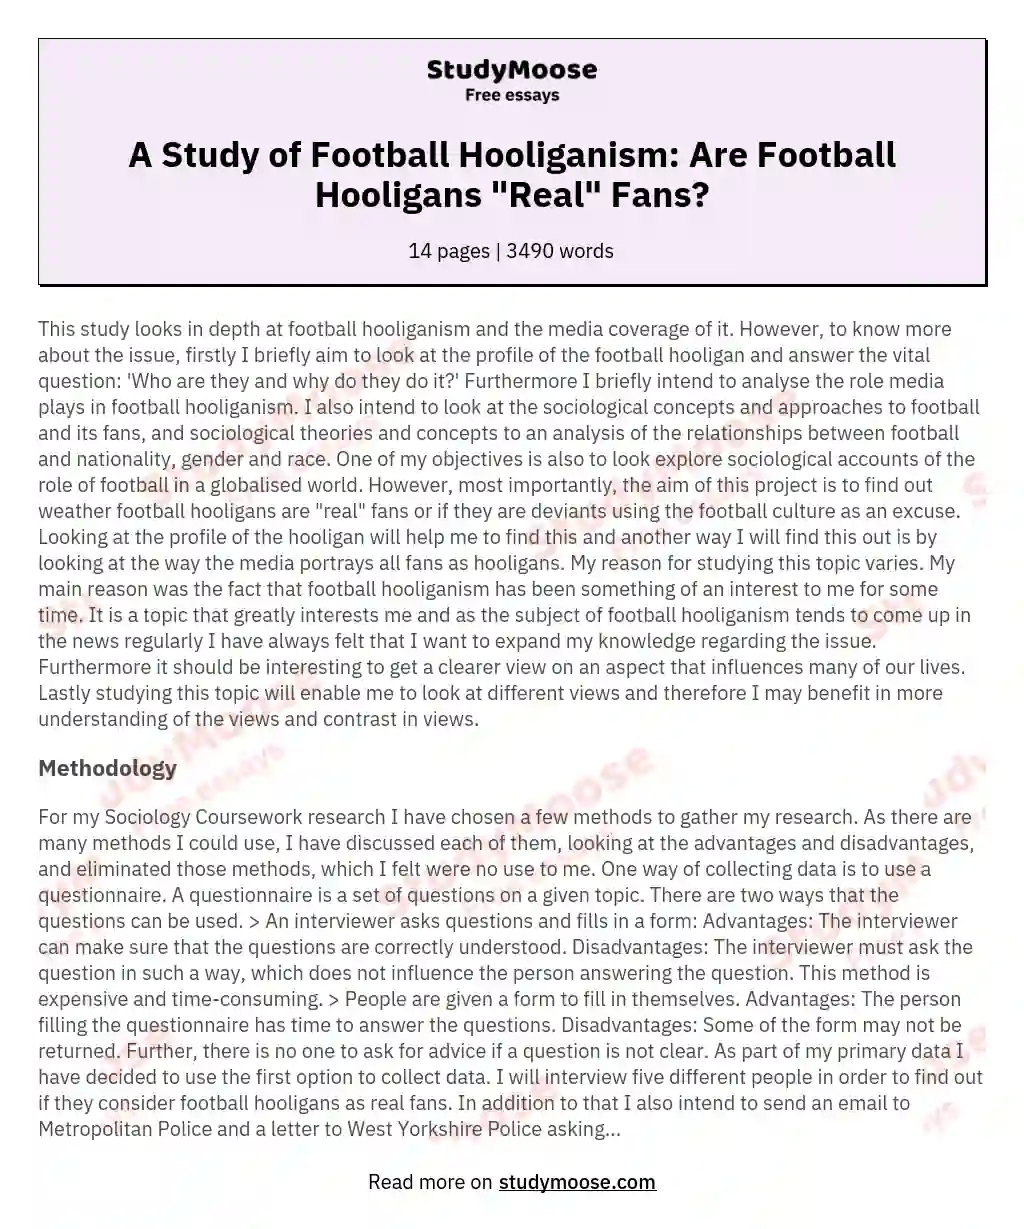 A Study of Football Hooliganism: Are Football Hooligans "Real" Fans? essay